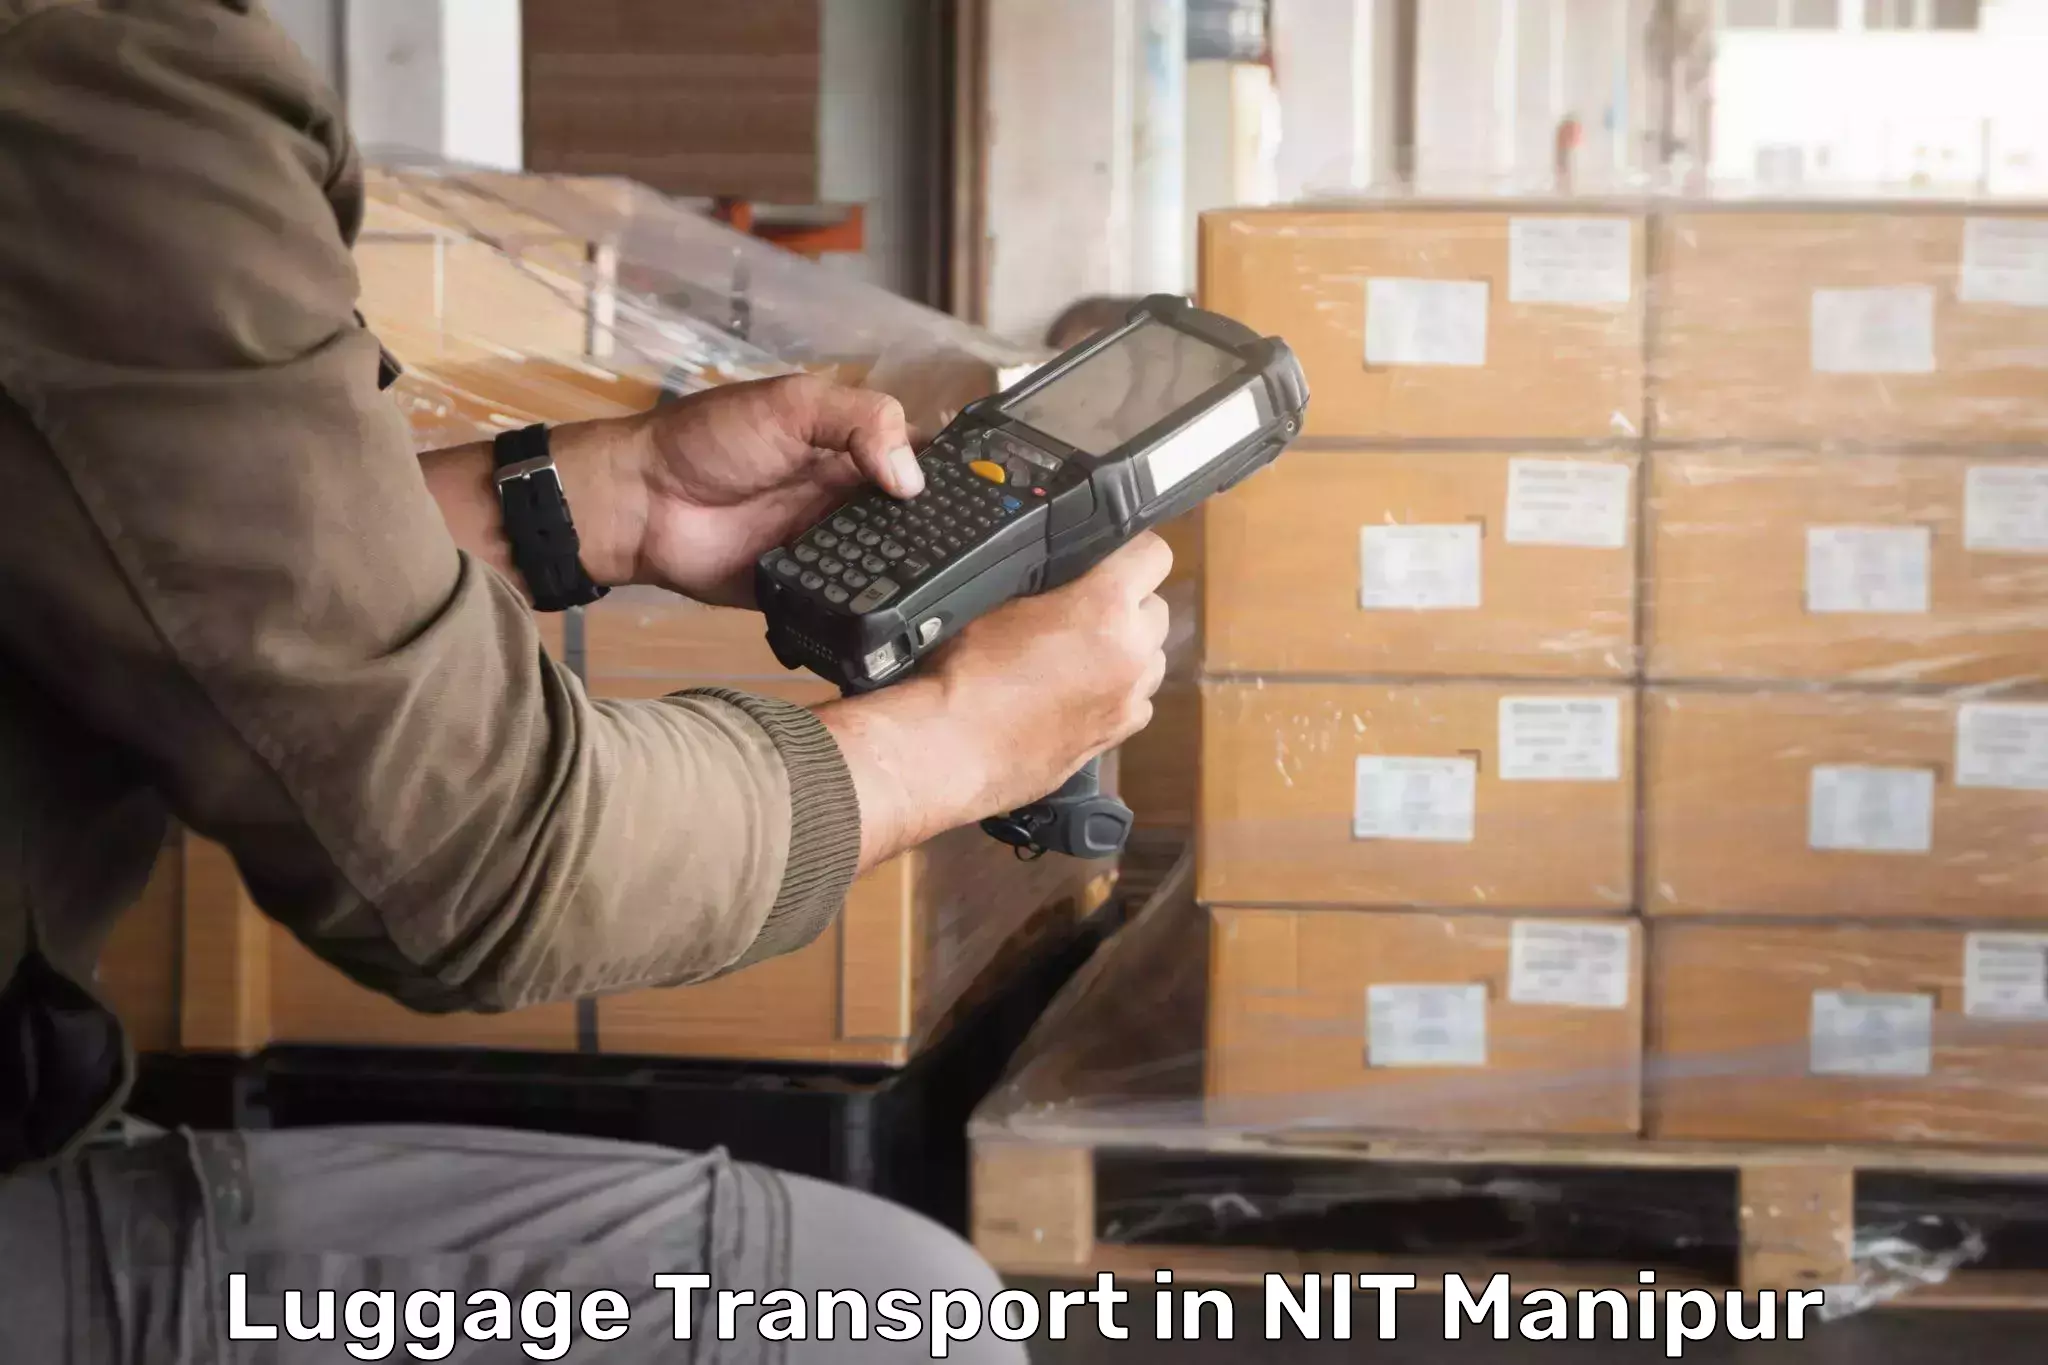 Urgent luggage shipment in NIT Manipur